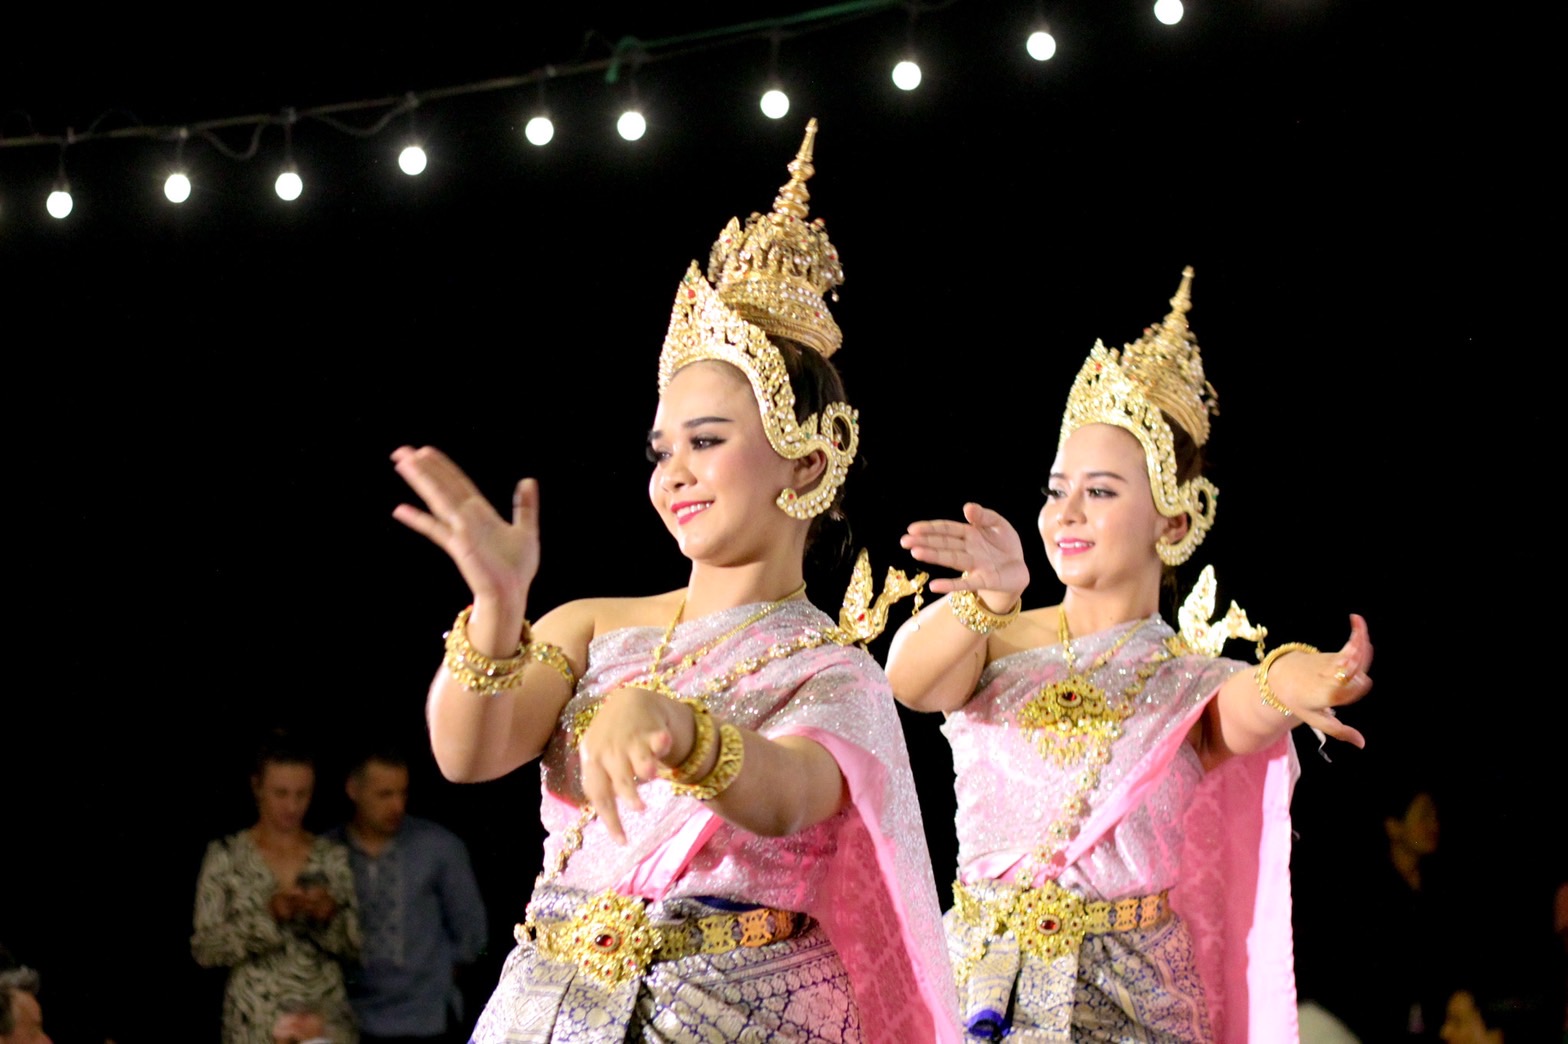 Thai dancing performance by the Lookmai Nattasin Hua Hin group